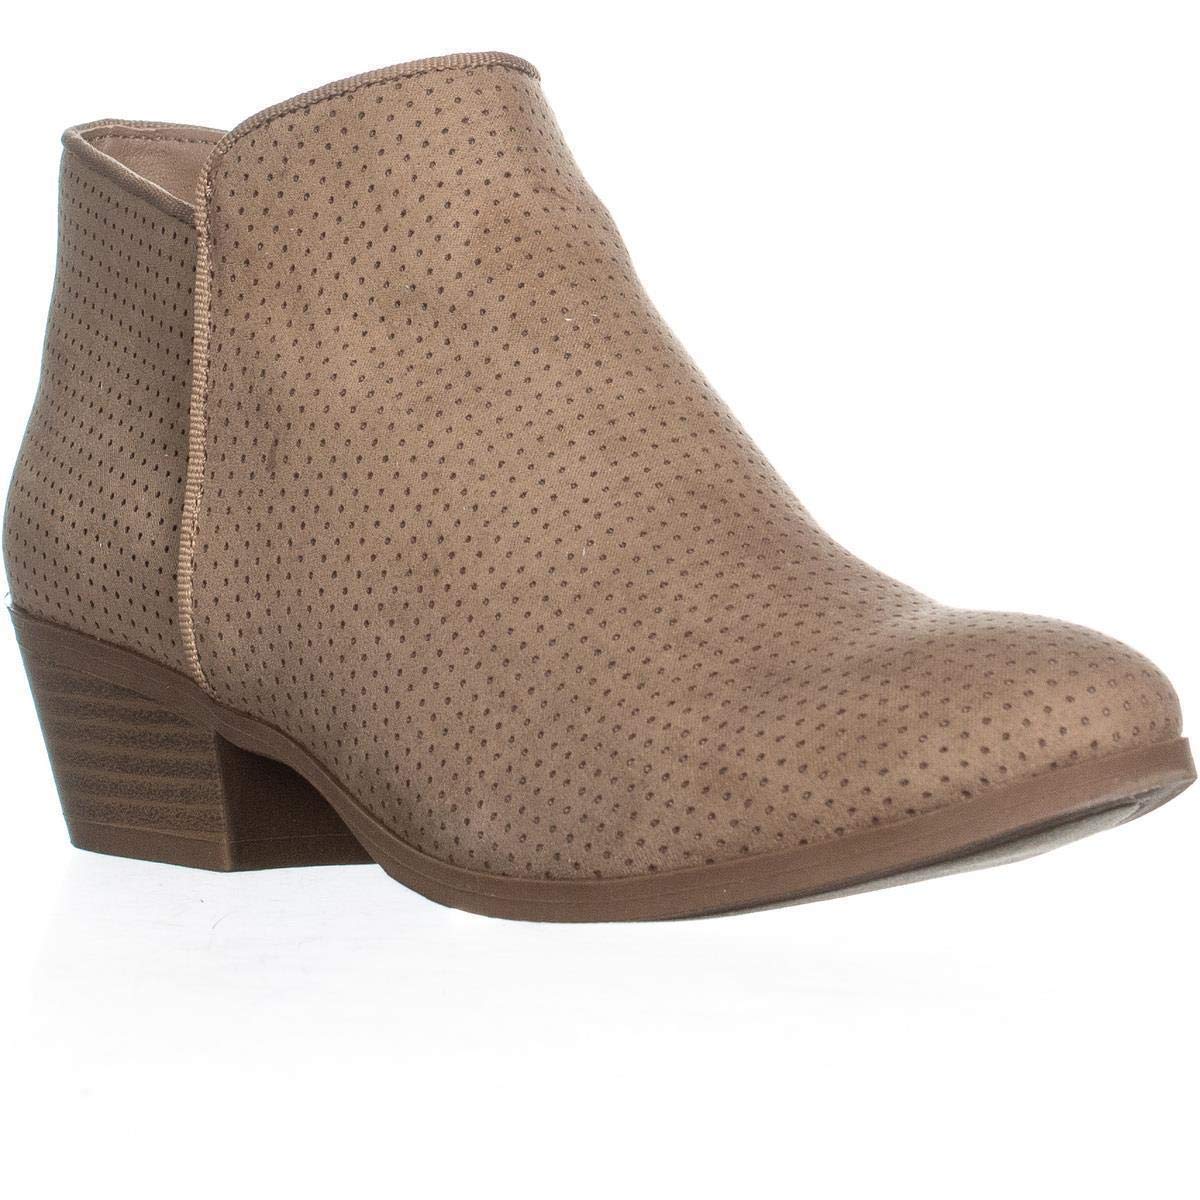 Style & Co. Womens Warrenn Almond Toe Ankle Fashion Boots, Tan, Size 8. ...